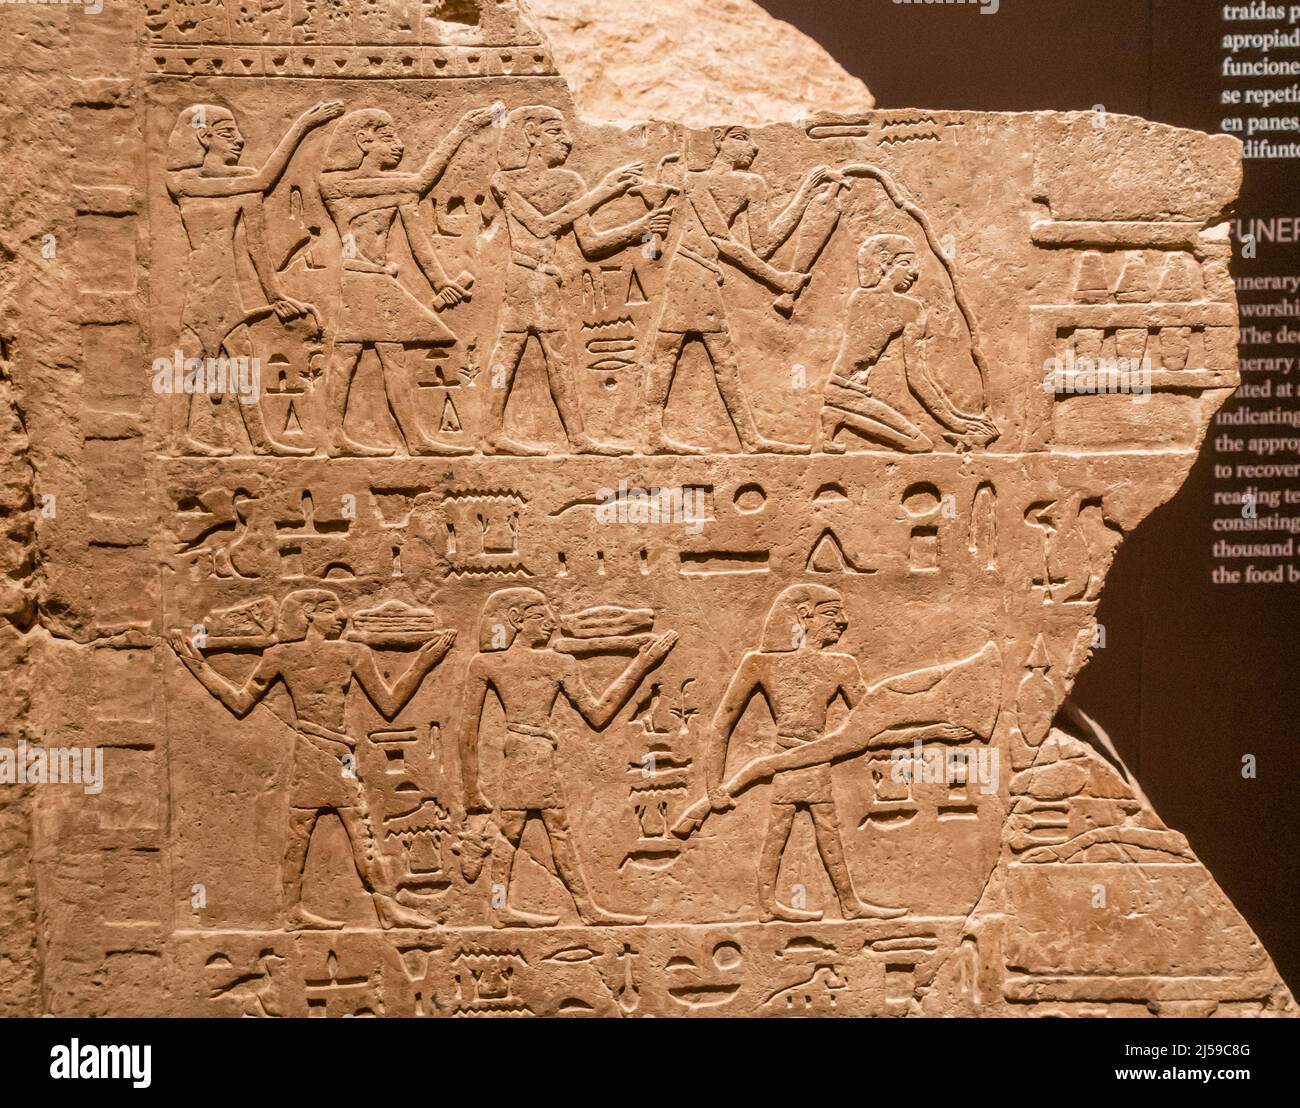 Fragment de paroi de la tombe de Satbahetep et de Neferkhaw - rituel - calcaire - 2100 - 1940 av. J.-C. et milieu du Royaume - Herakléopolis Magna - Ihnasya el-Medina Banque D'Images